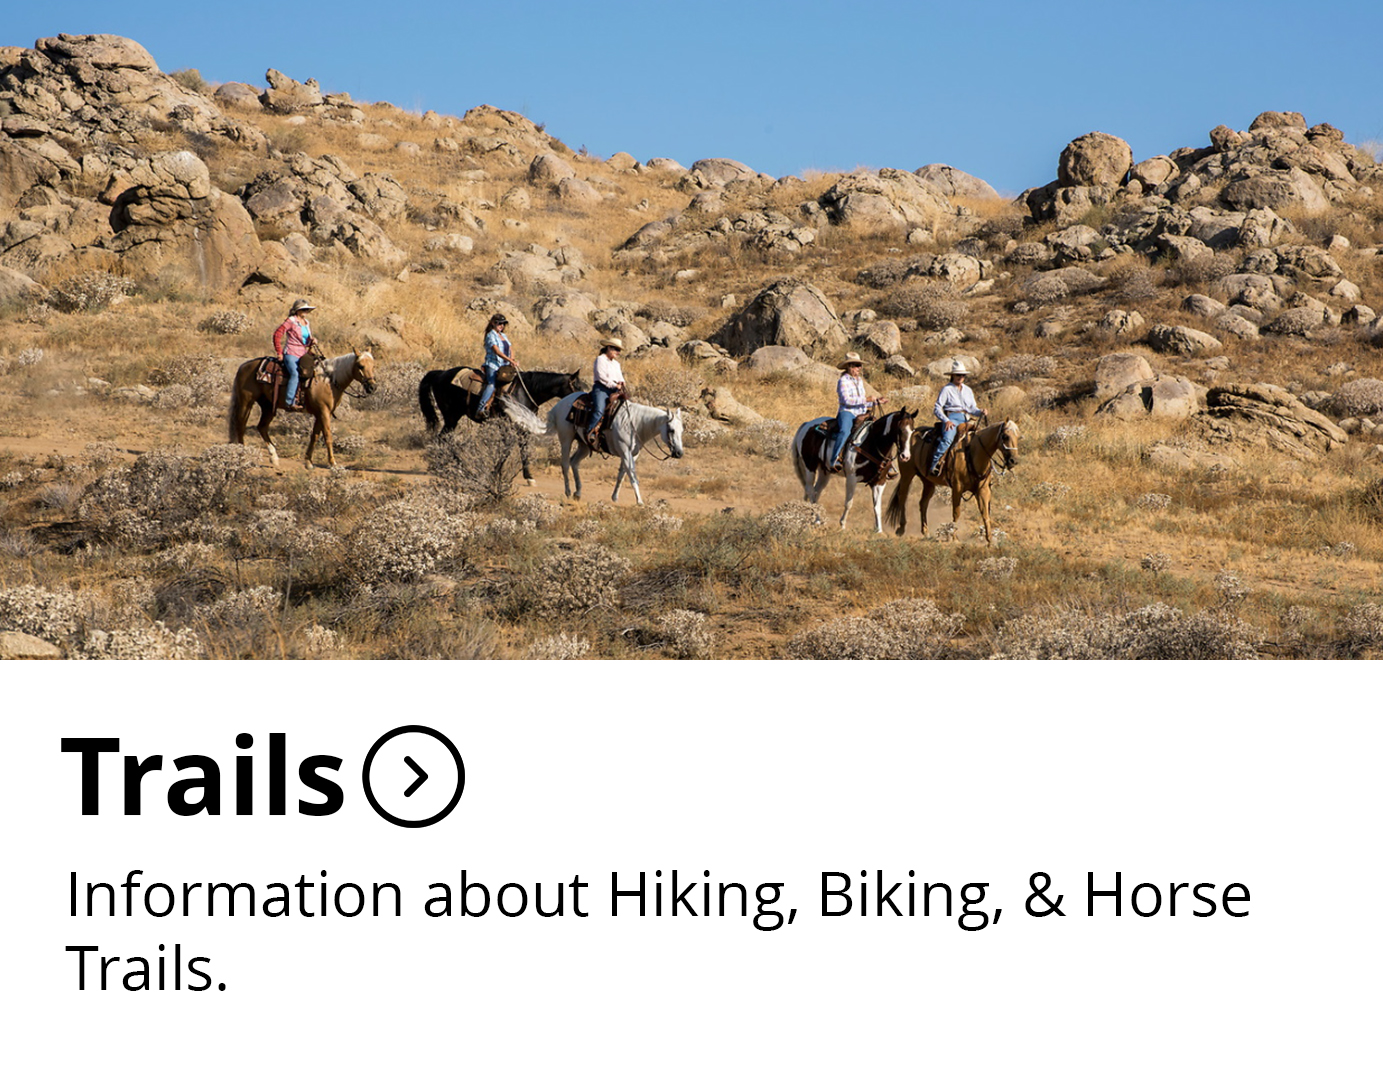 Hiking, Biking, and Horse Back Riding